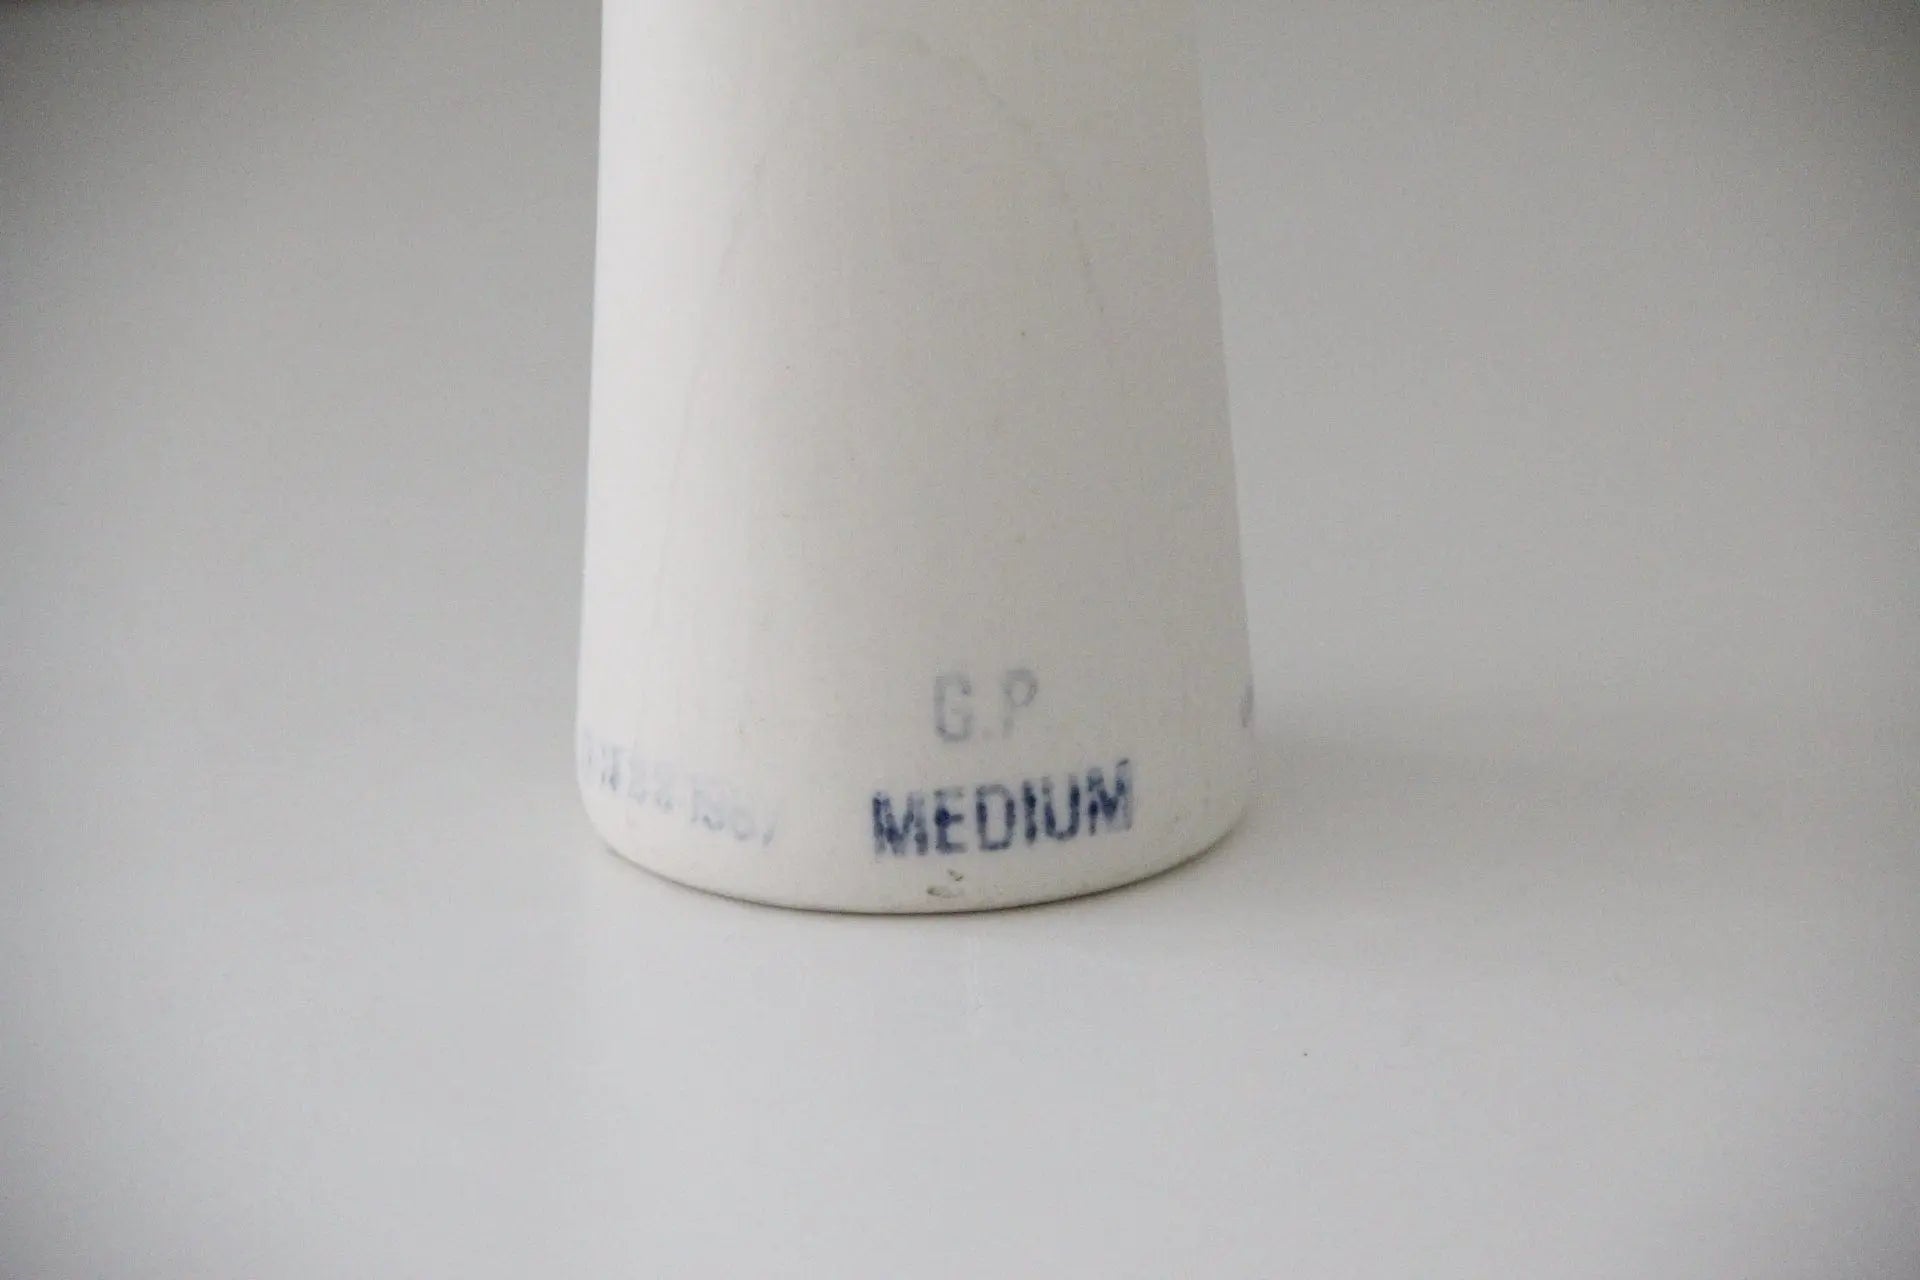 Vintage Porcelain Glove Mold | Matte Finish | Medium  Debra Hall Lifestyle